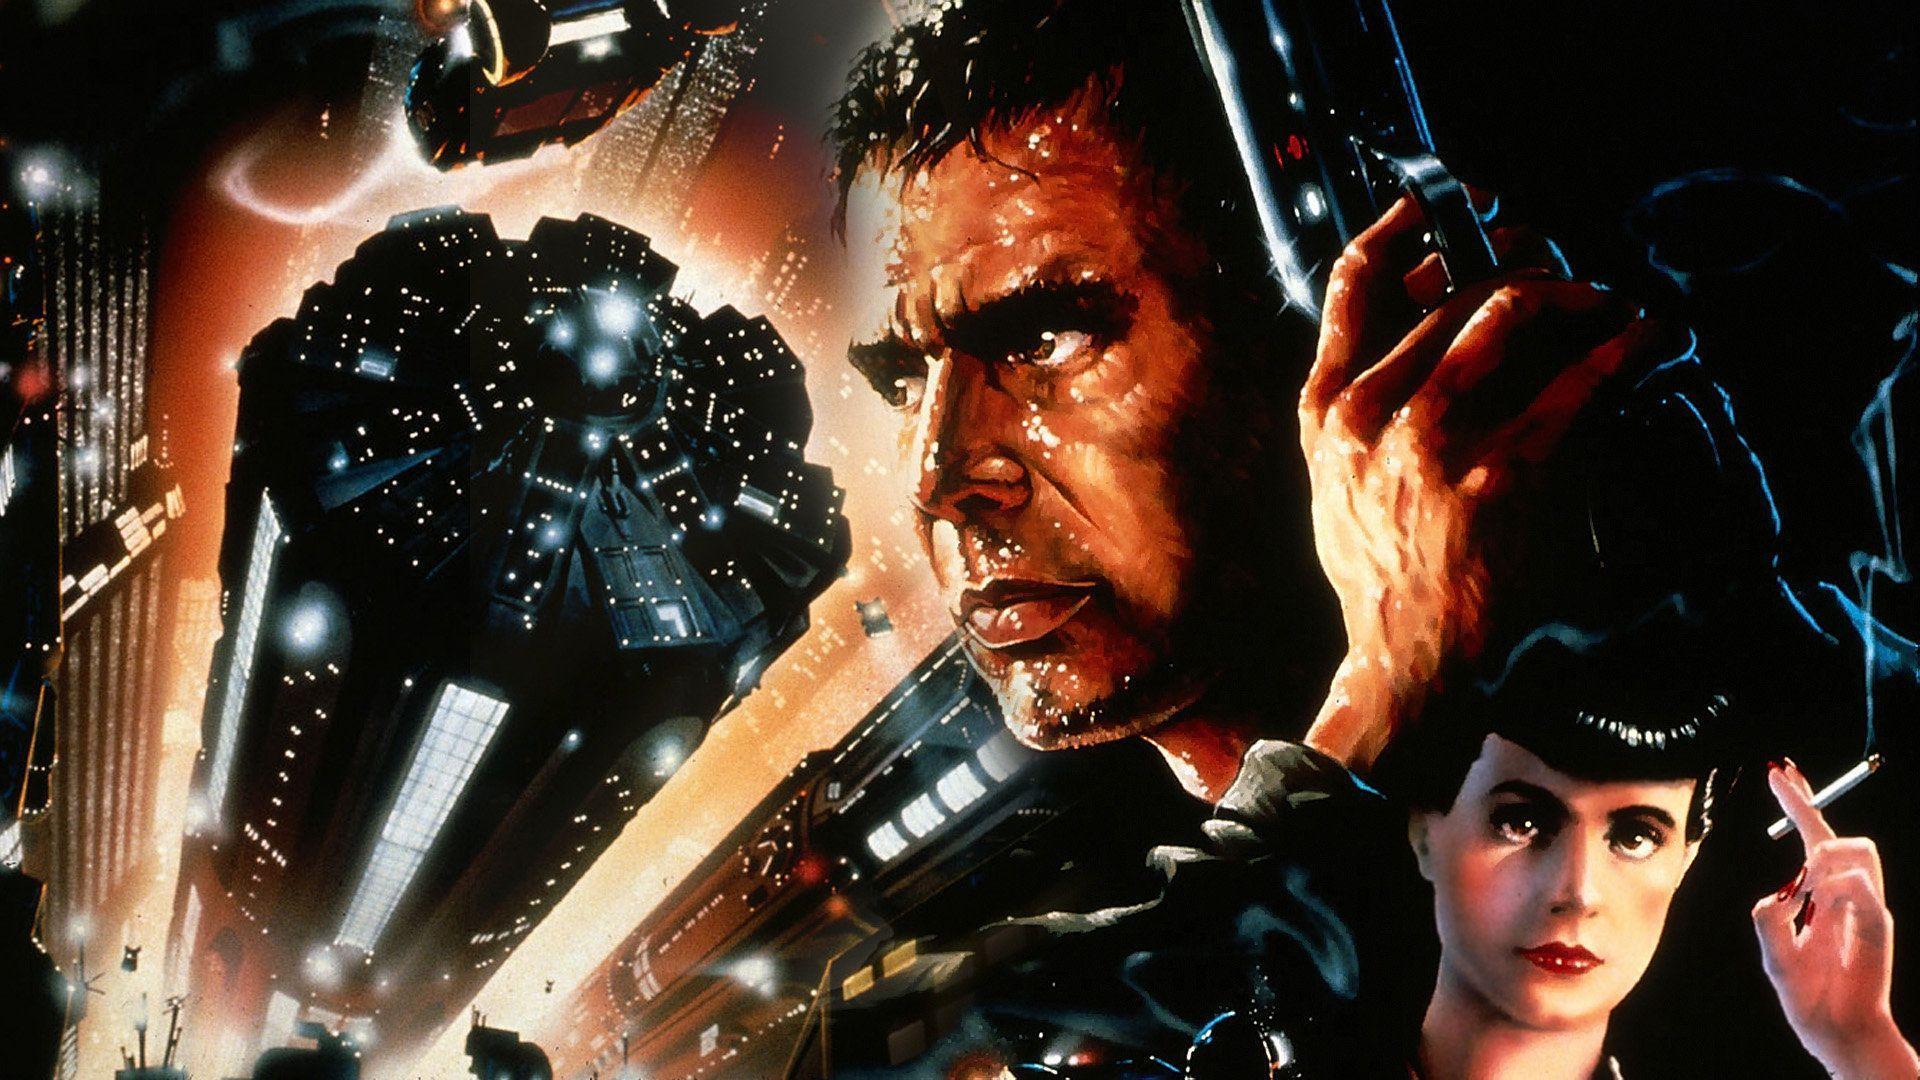 Blade Runner 2049 Poster Wallpapers